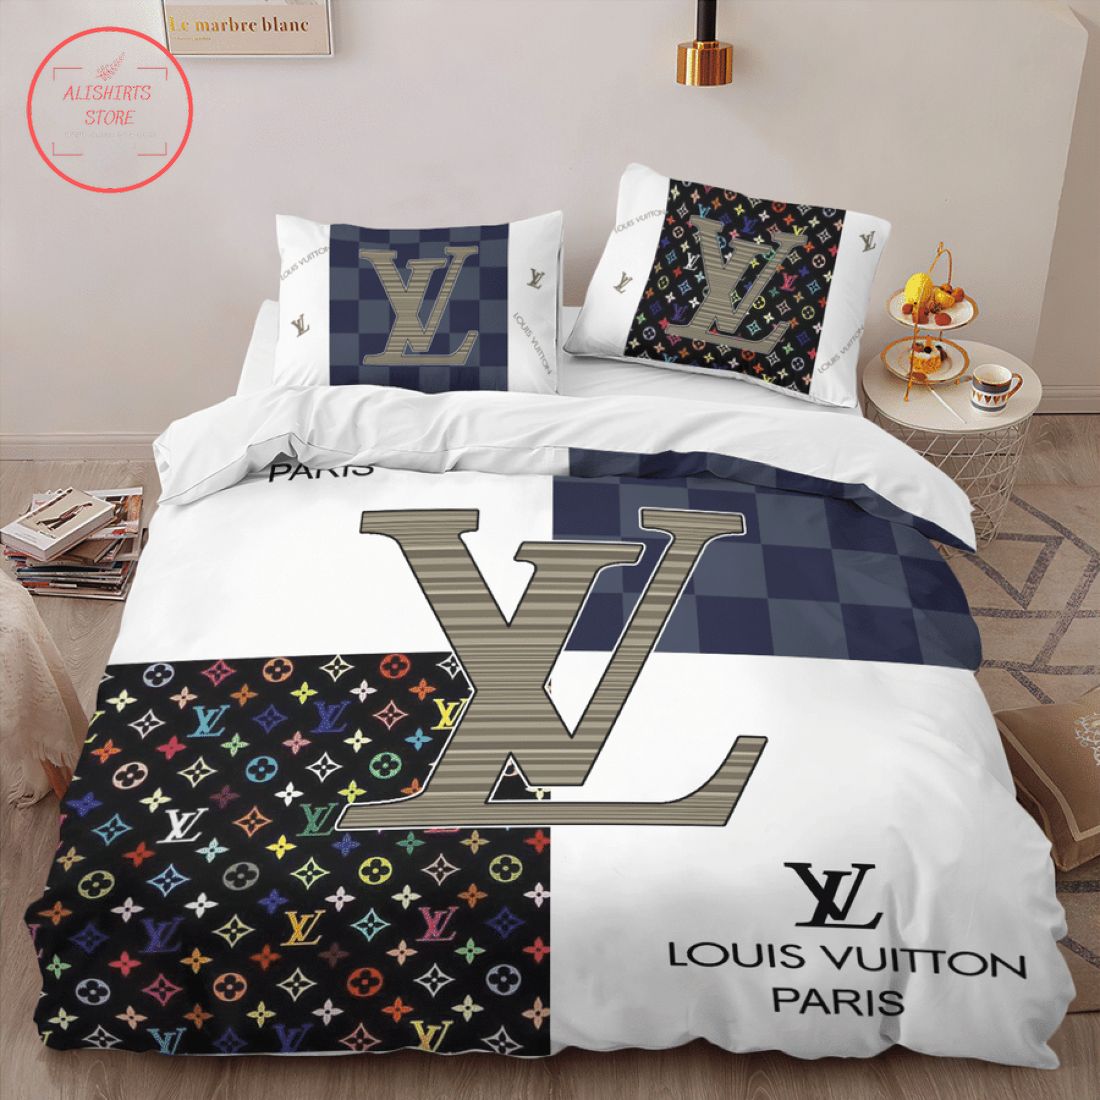 Louis Vuitton Paris Luxury Brand Quilt Bedding Set